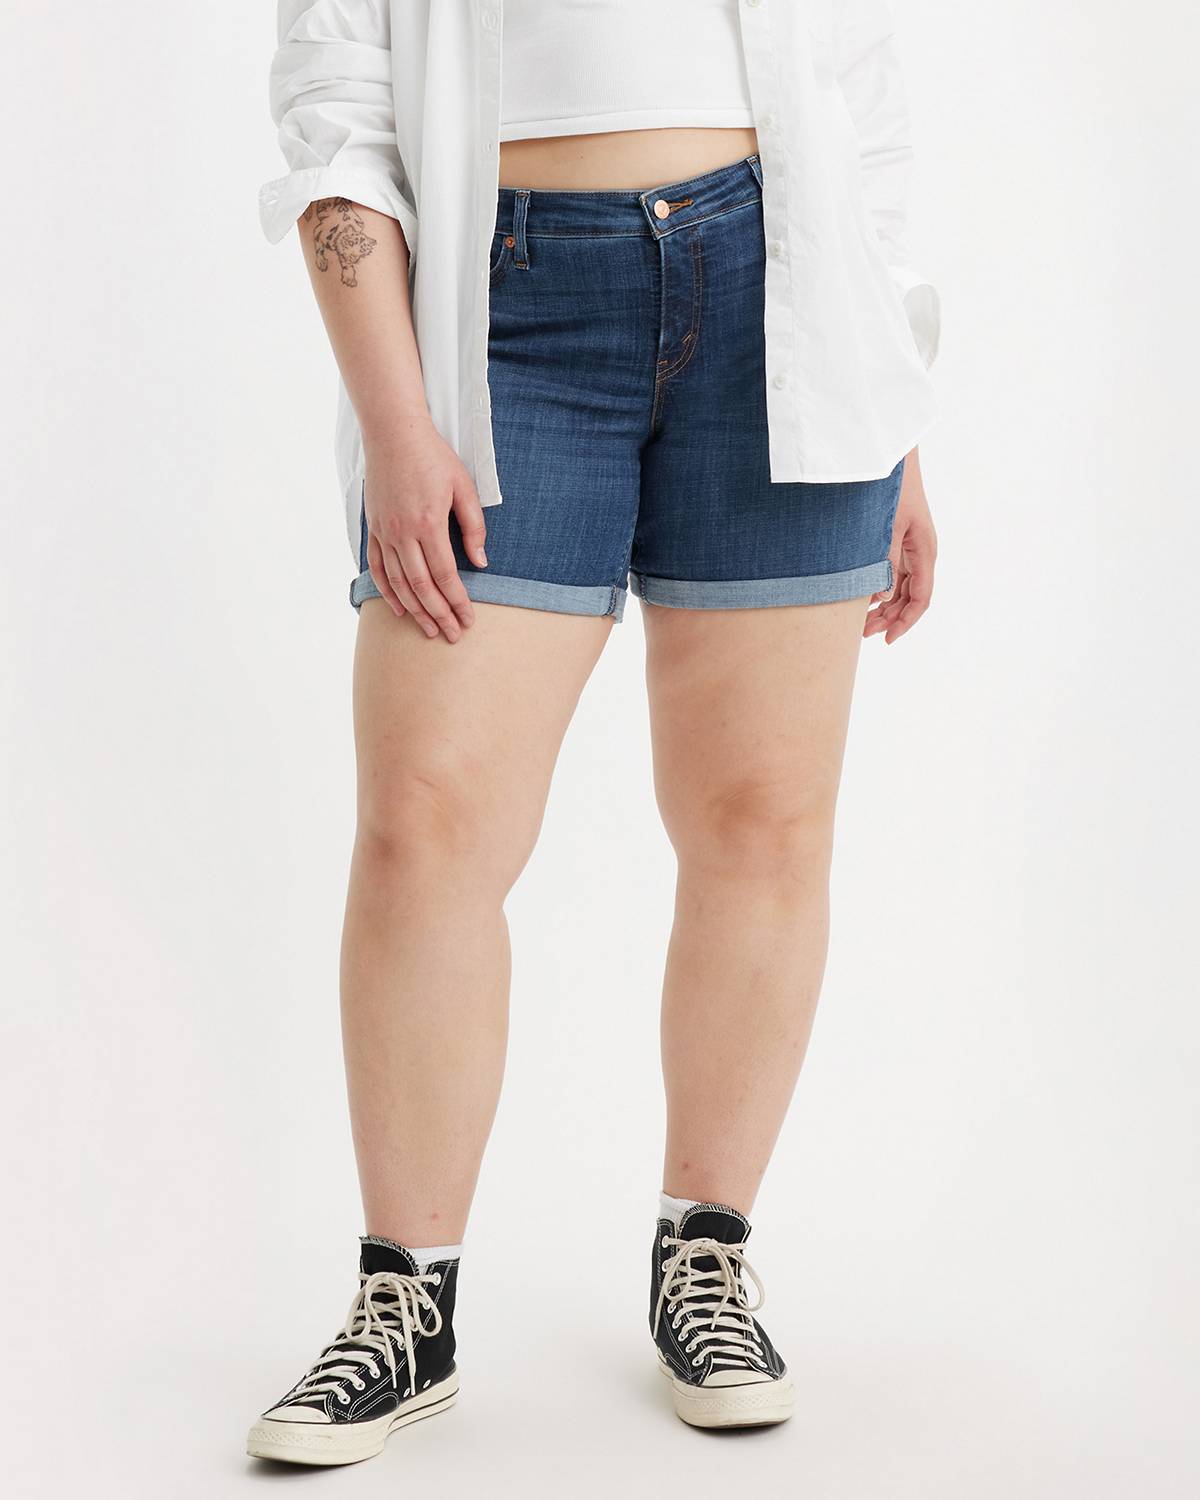 Model wearing plus-sized shorts